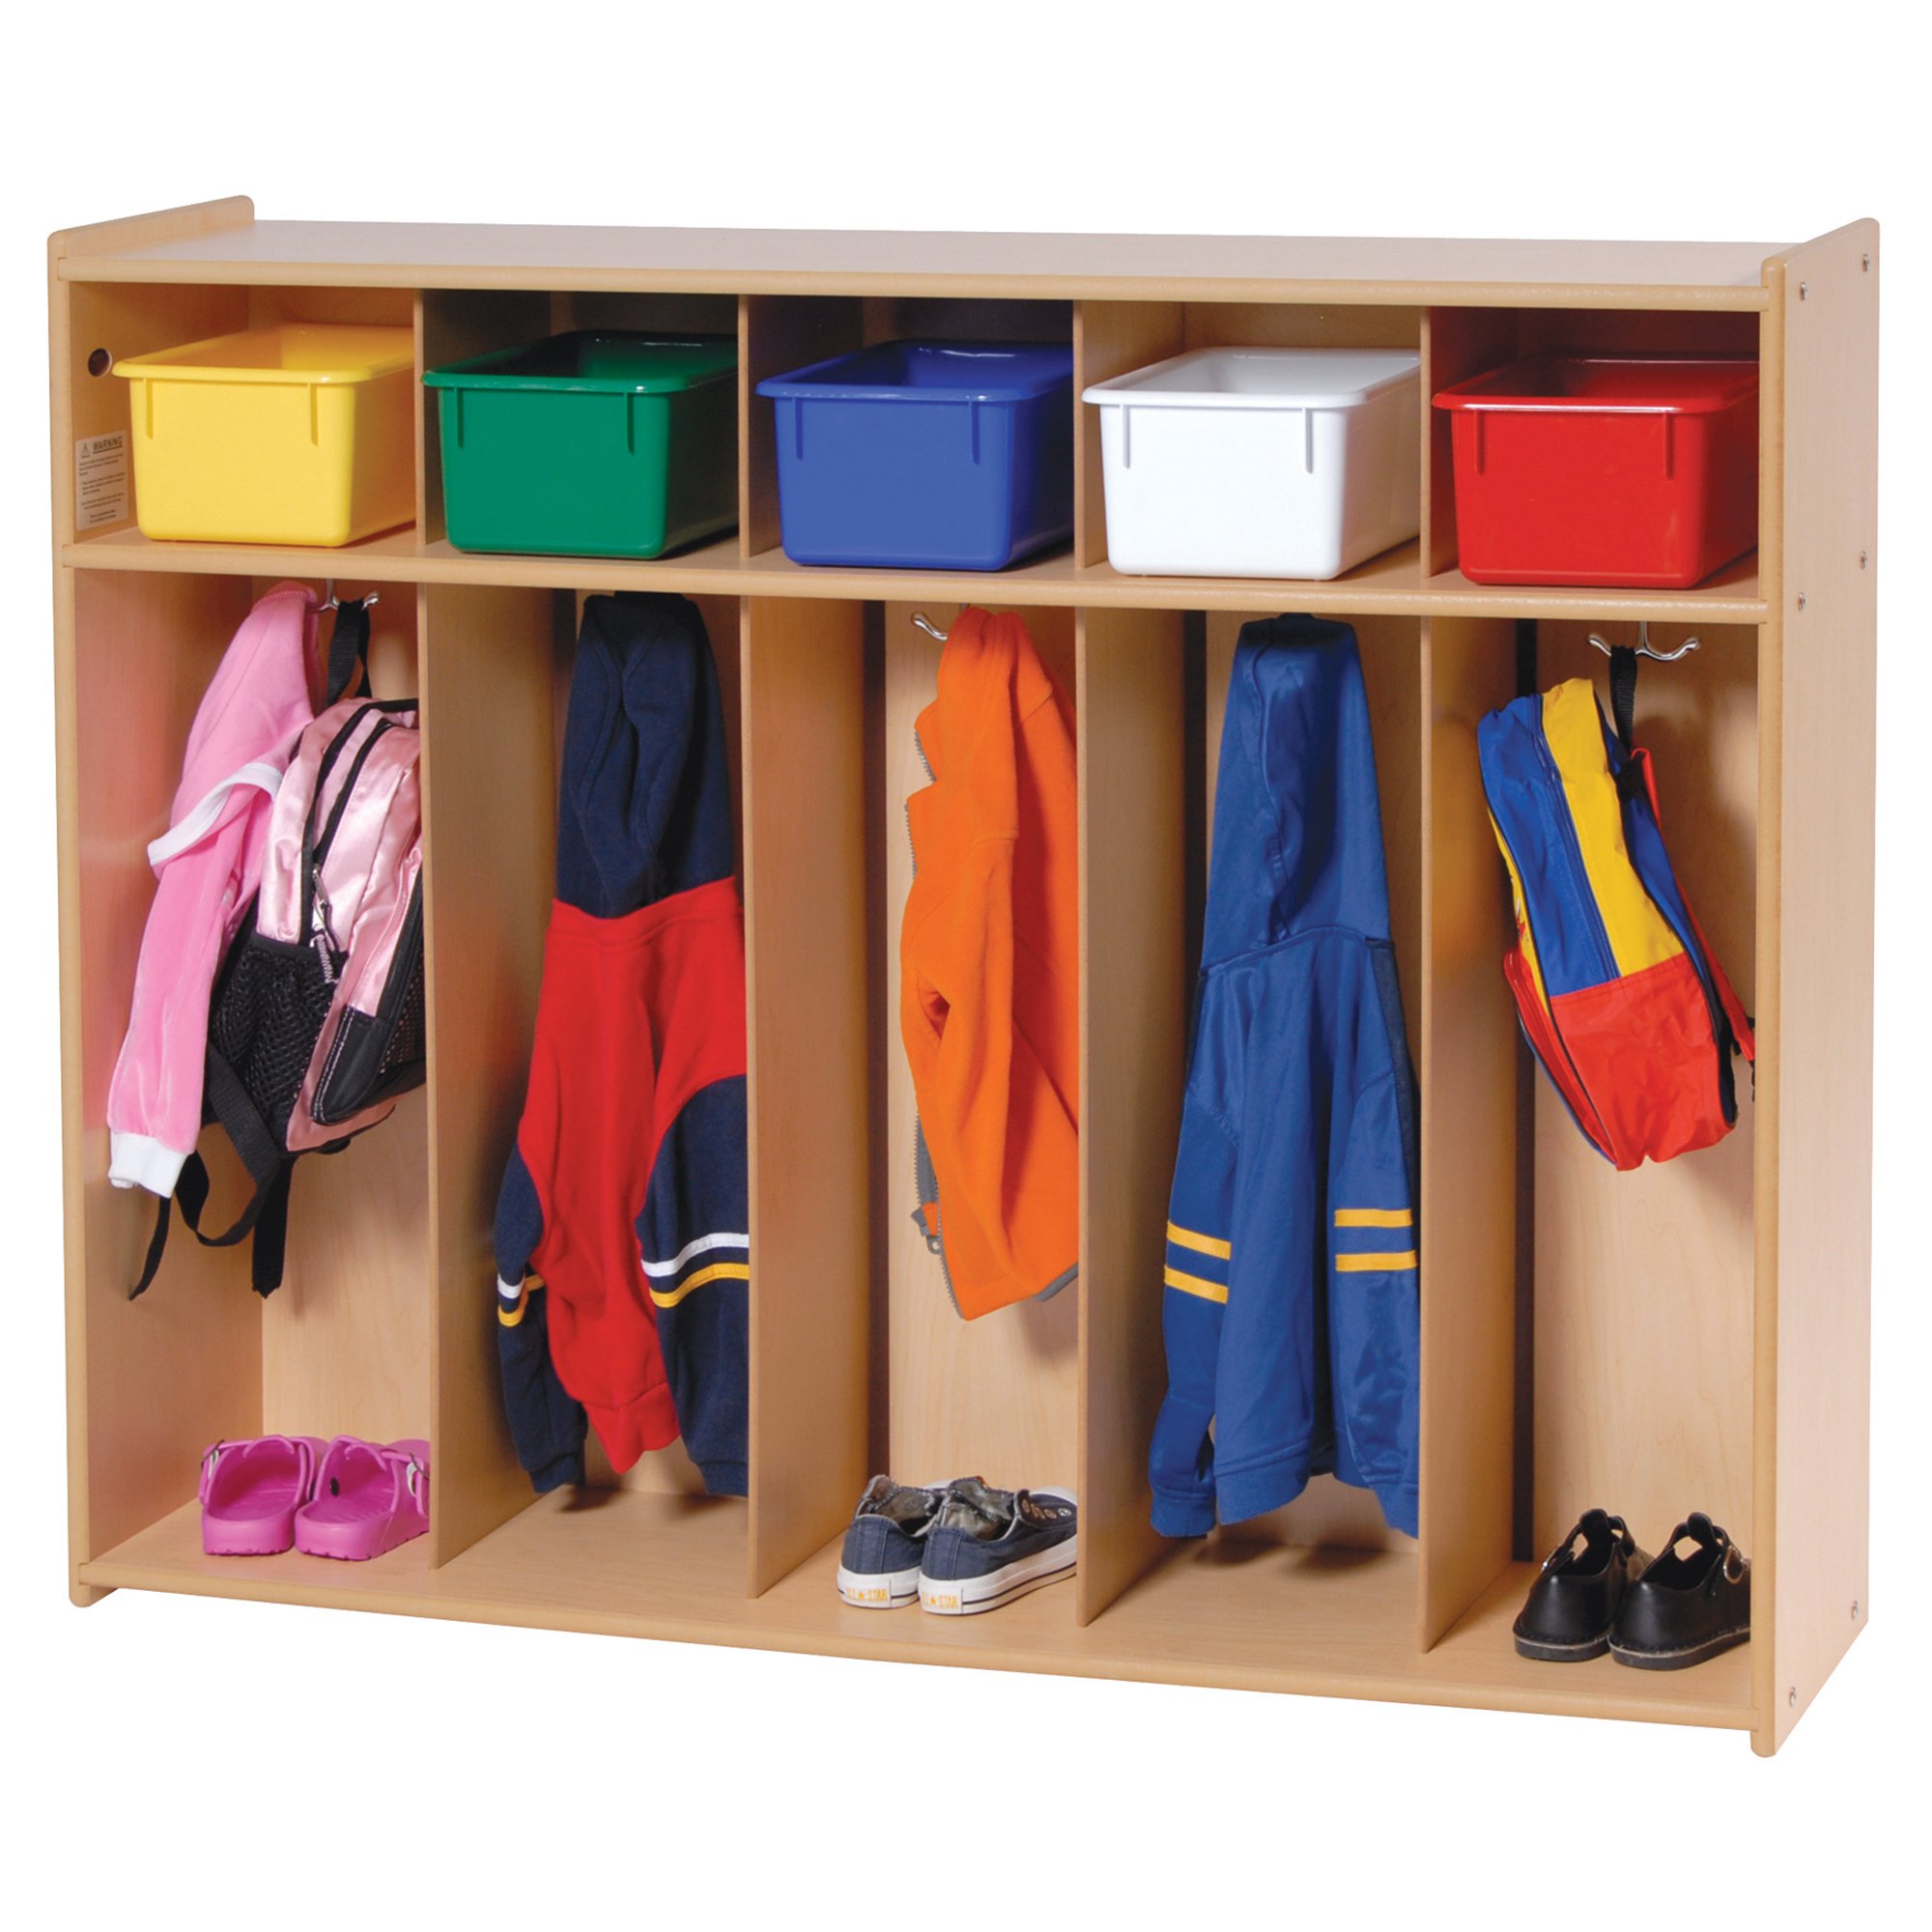 Шкаф для одежды ребенку. Шкаф для вещей. Шкафчики для детского сада. Шкафчик для одежды в детский сад. Шкаф для вещей для детей.